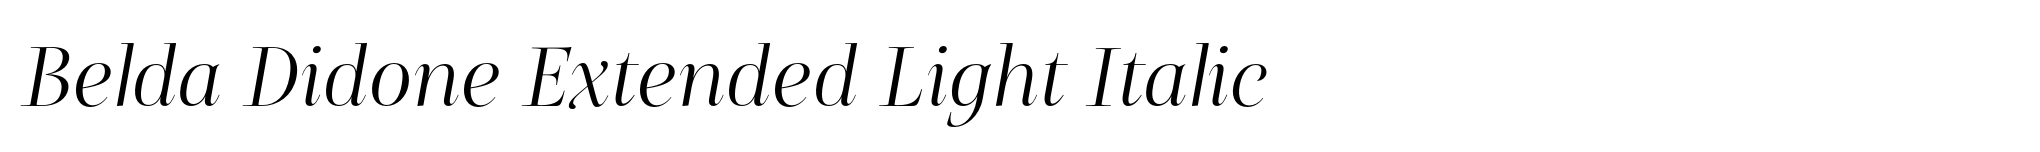 Belda Didone Extended Light Italic image